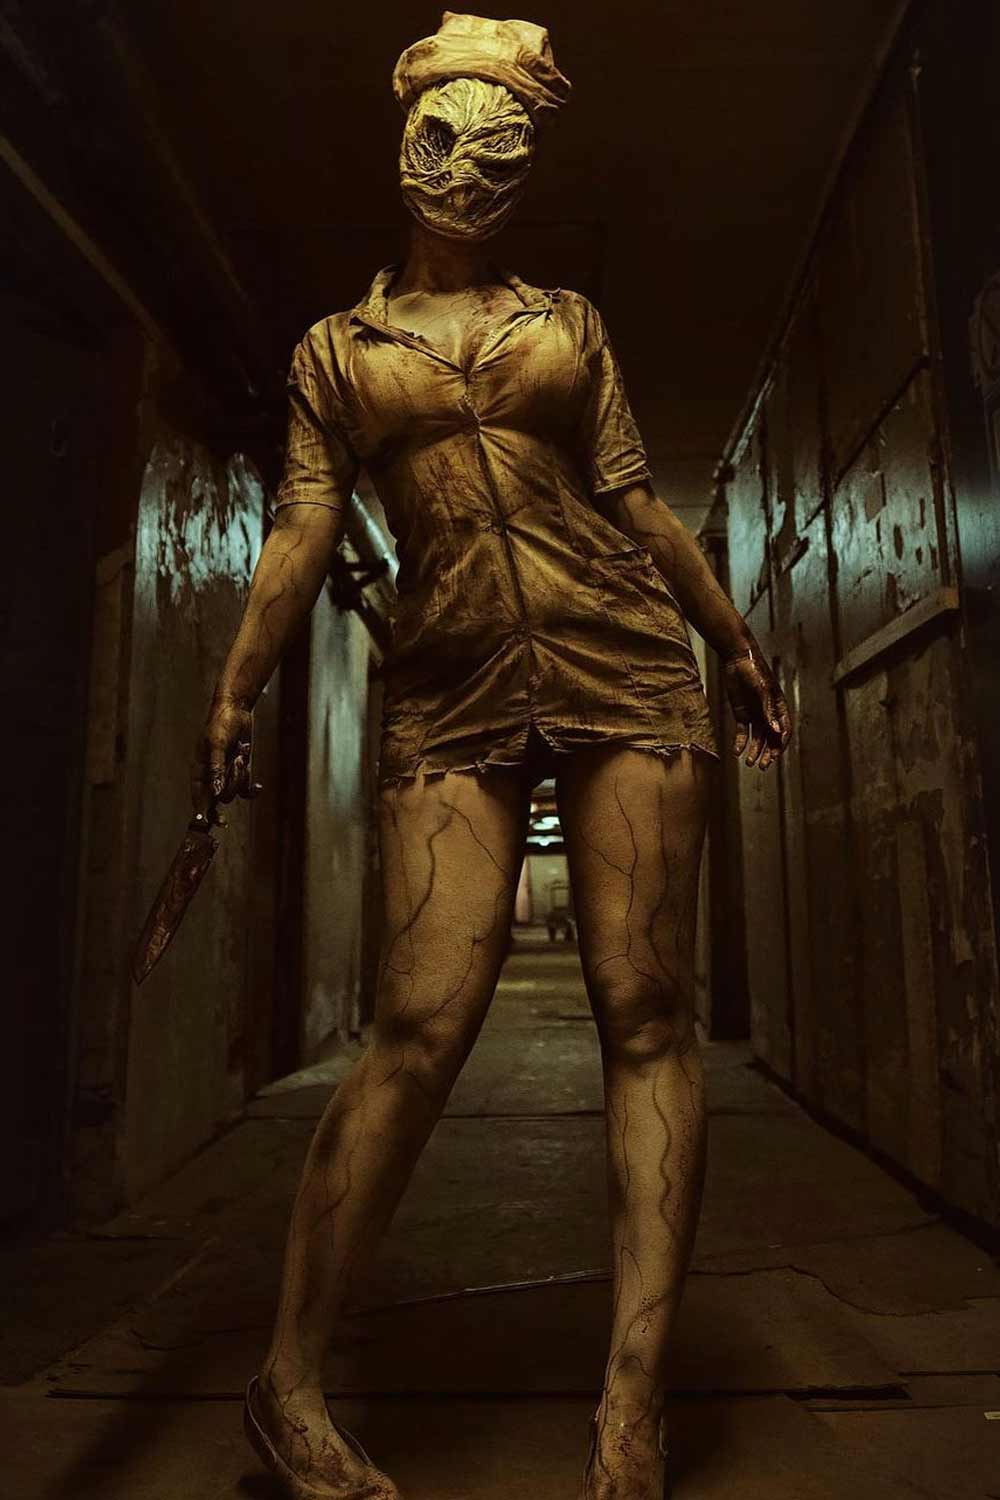 Nurse from Silent Hill Creepy Halloween Costume